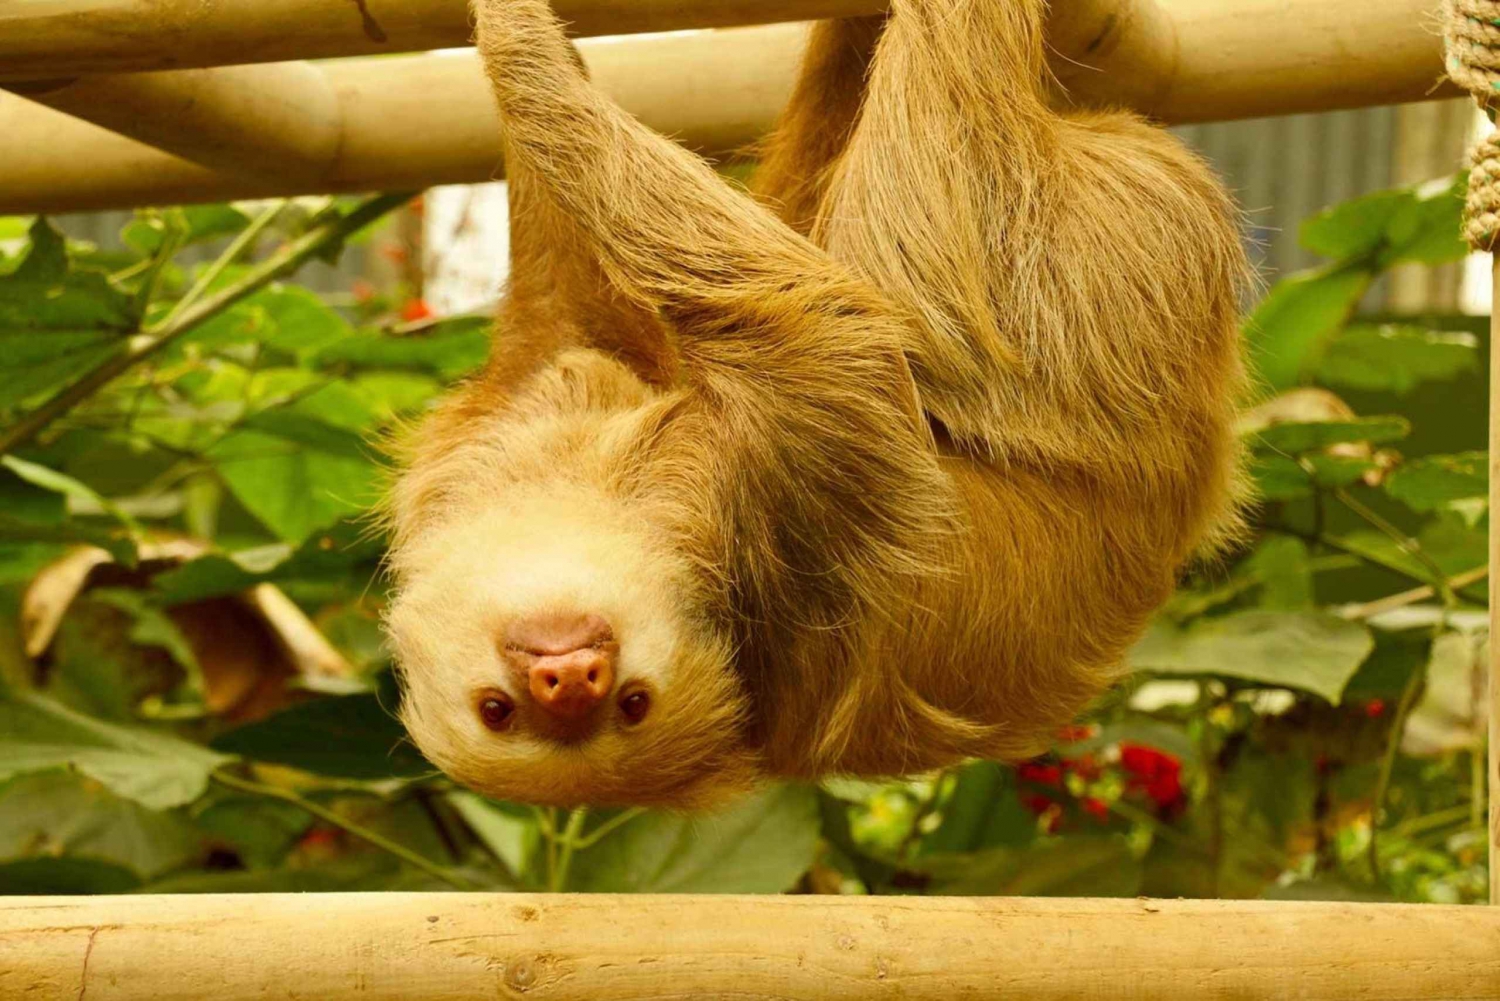 Sloth Sanctuary in Monteverde